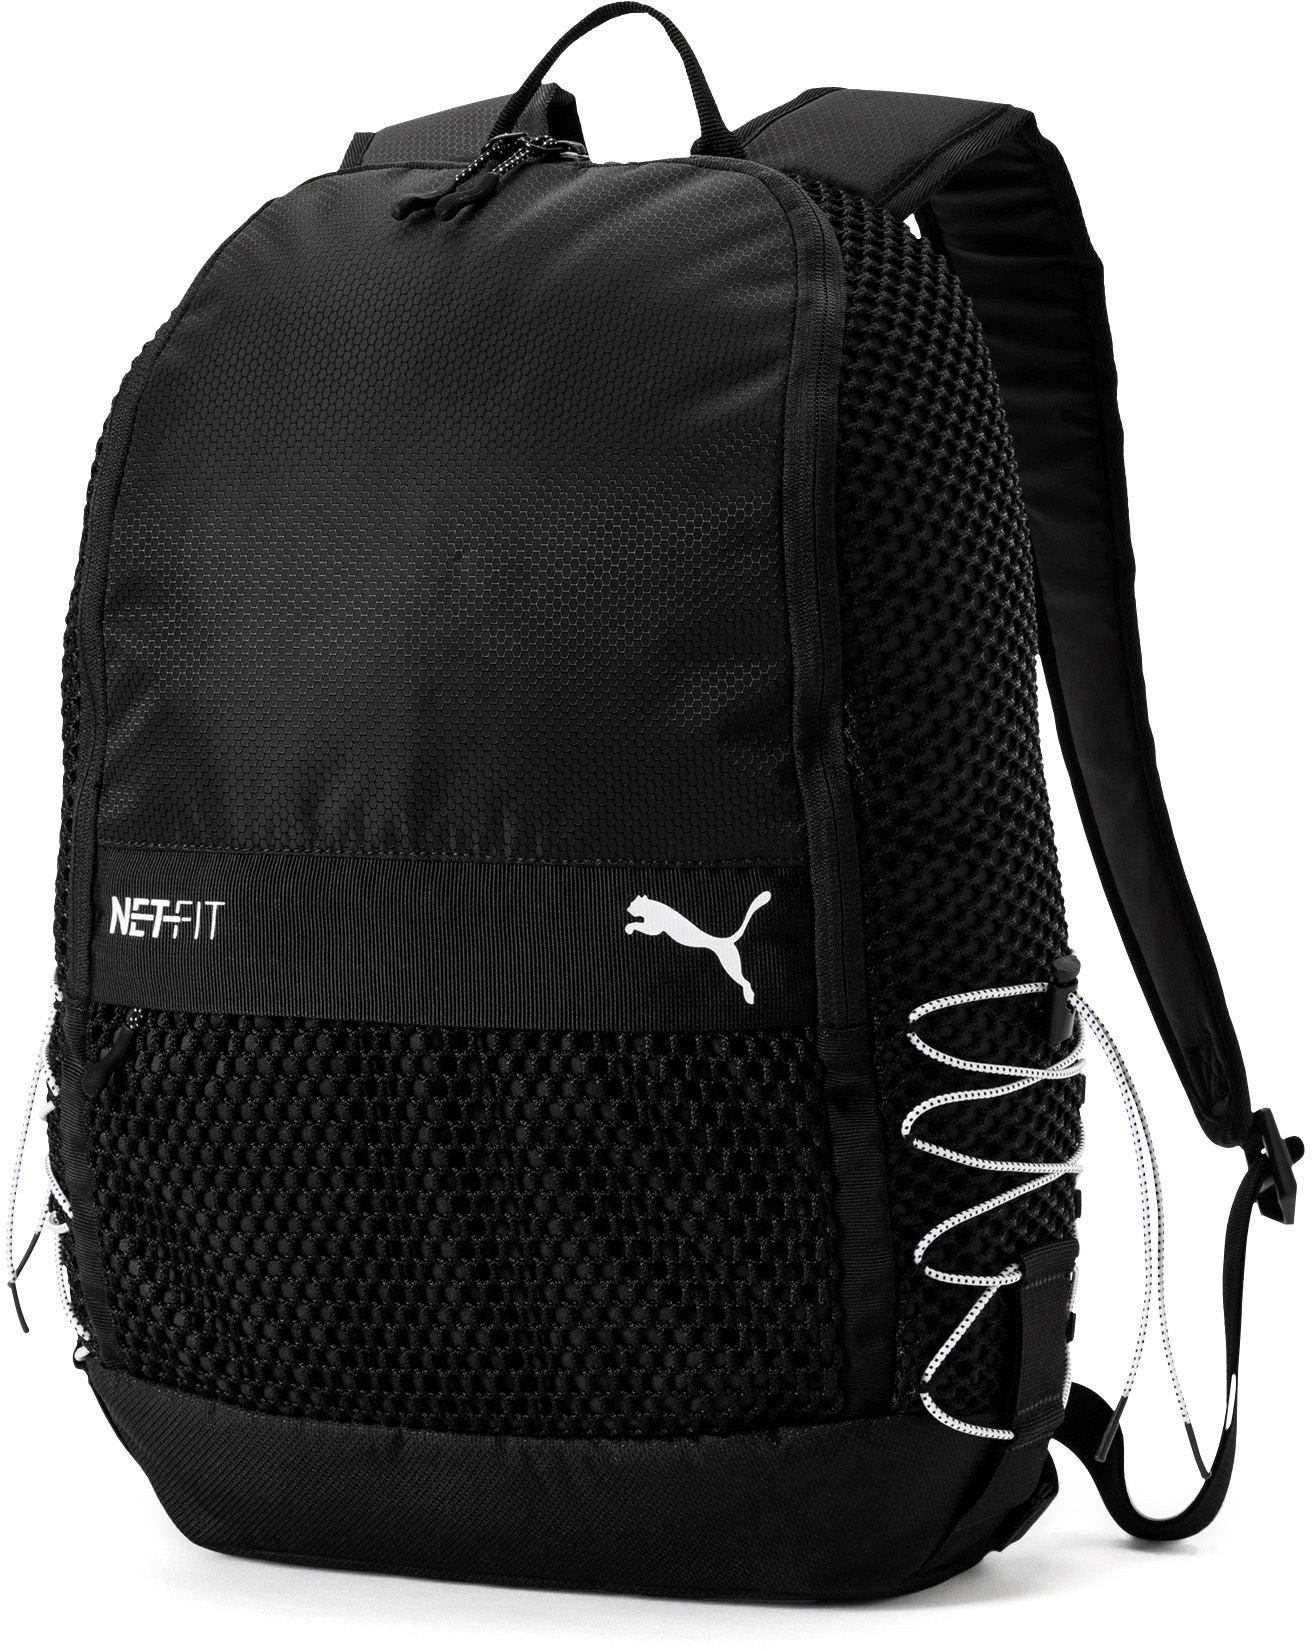 Batoh Puma Backpack Netfit Black